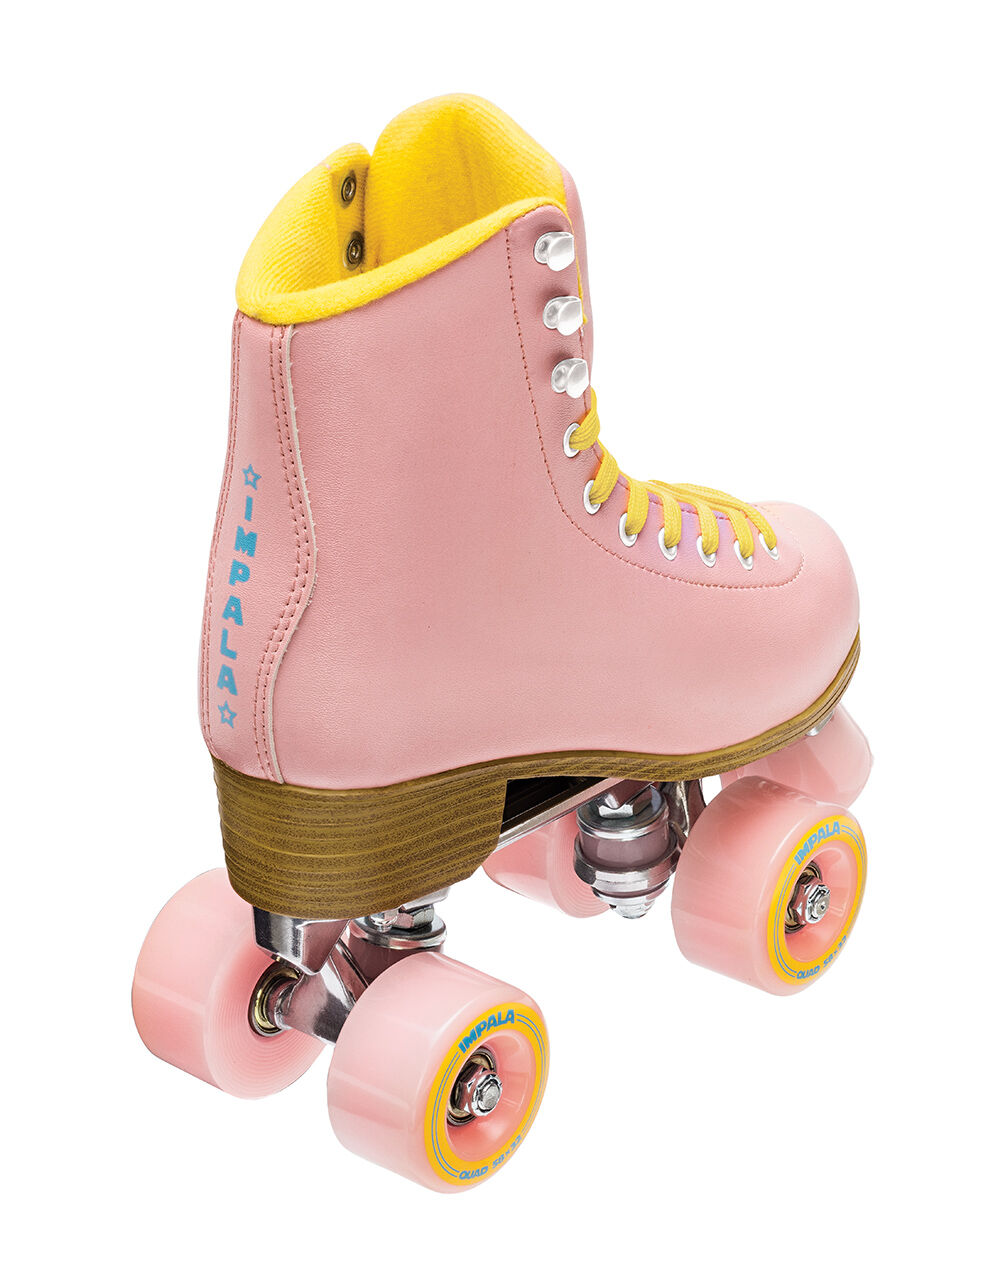 Quad Rollschuhe / Rollerskates Impala Chaussures Femme en pink